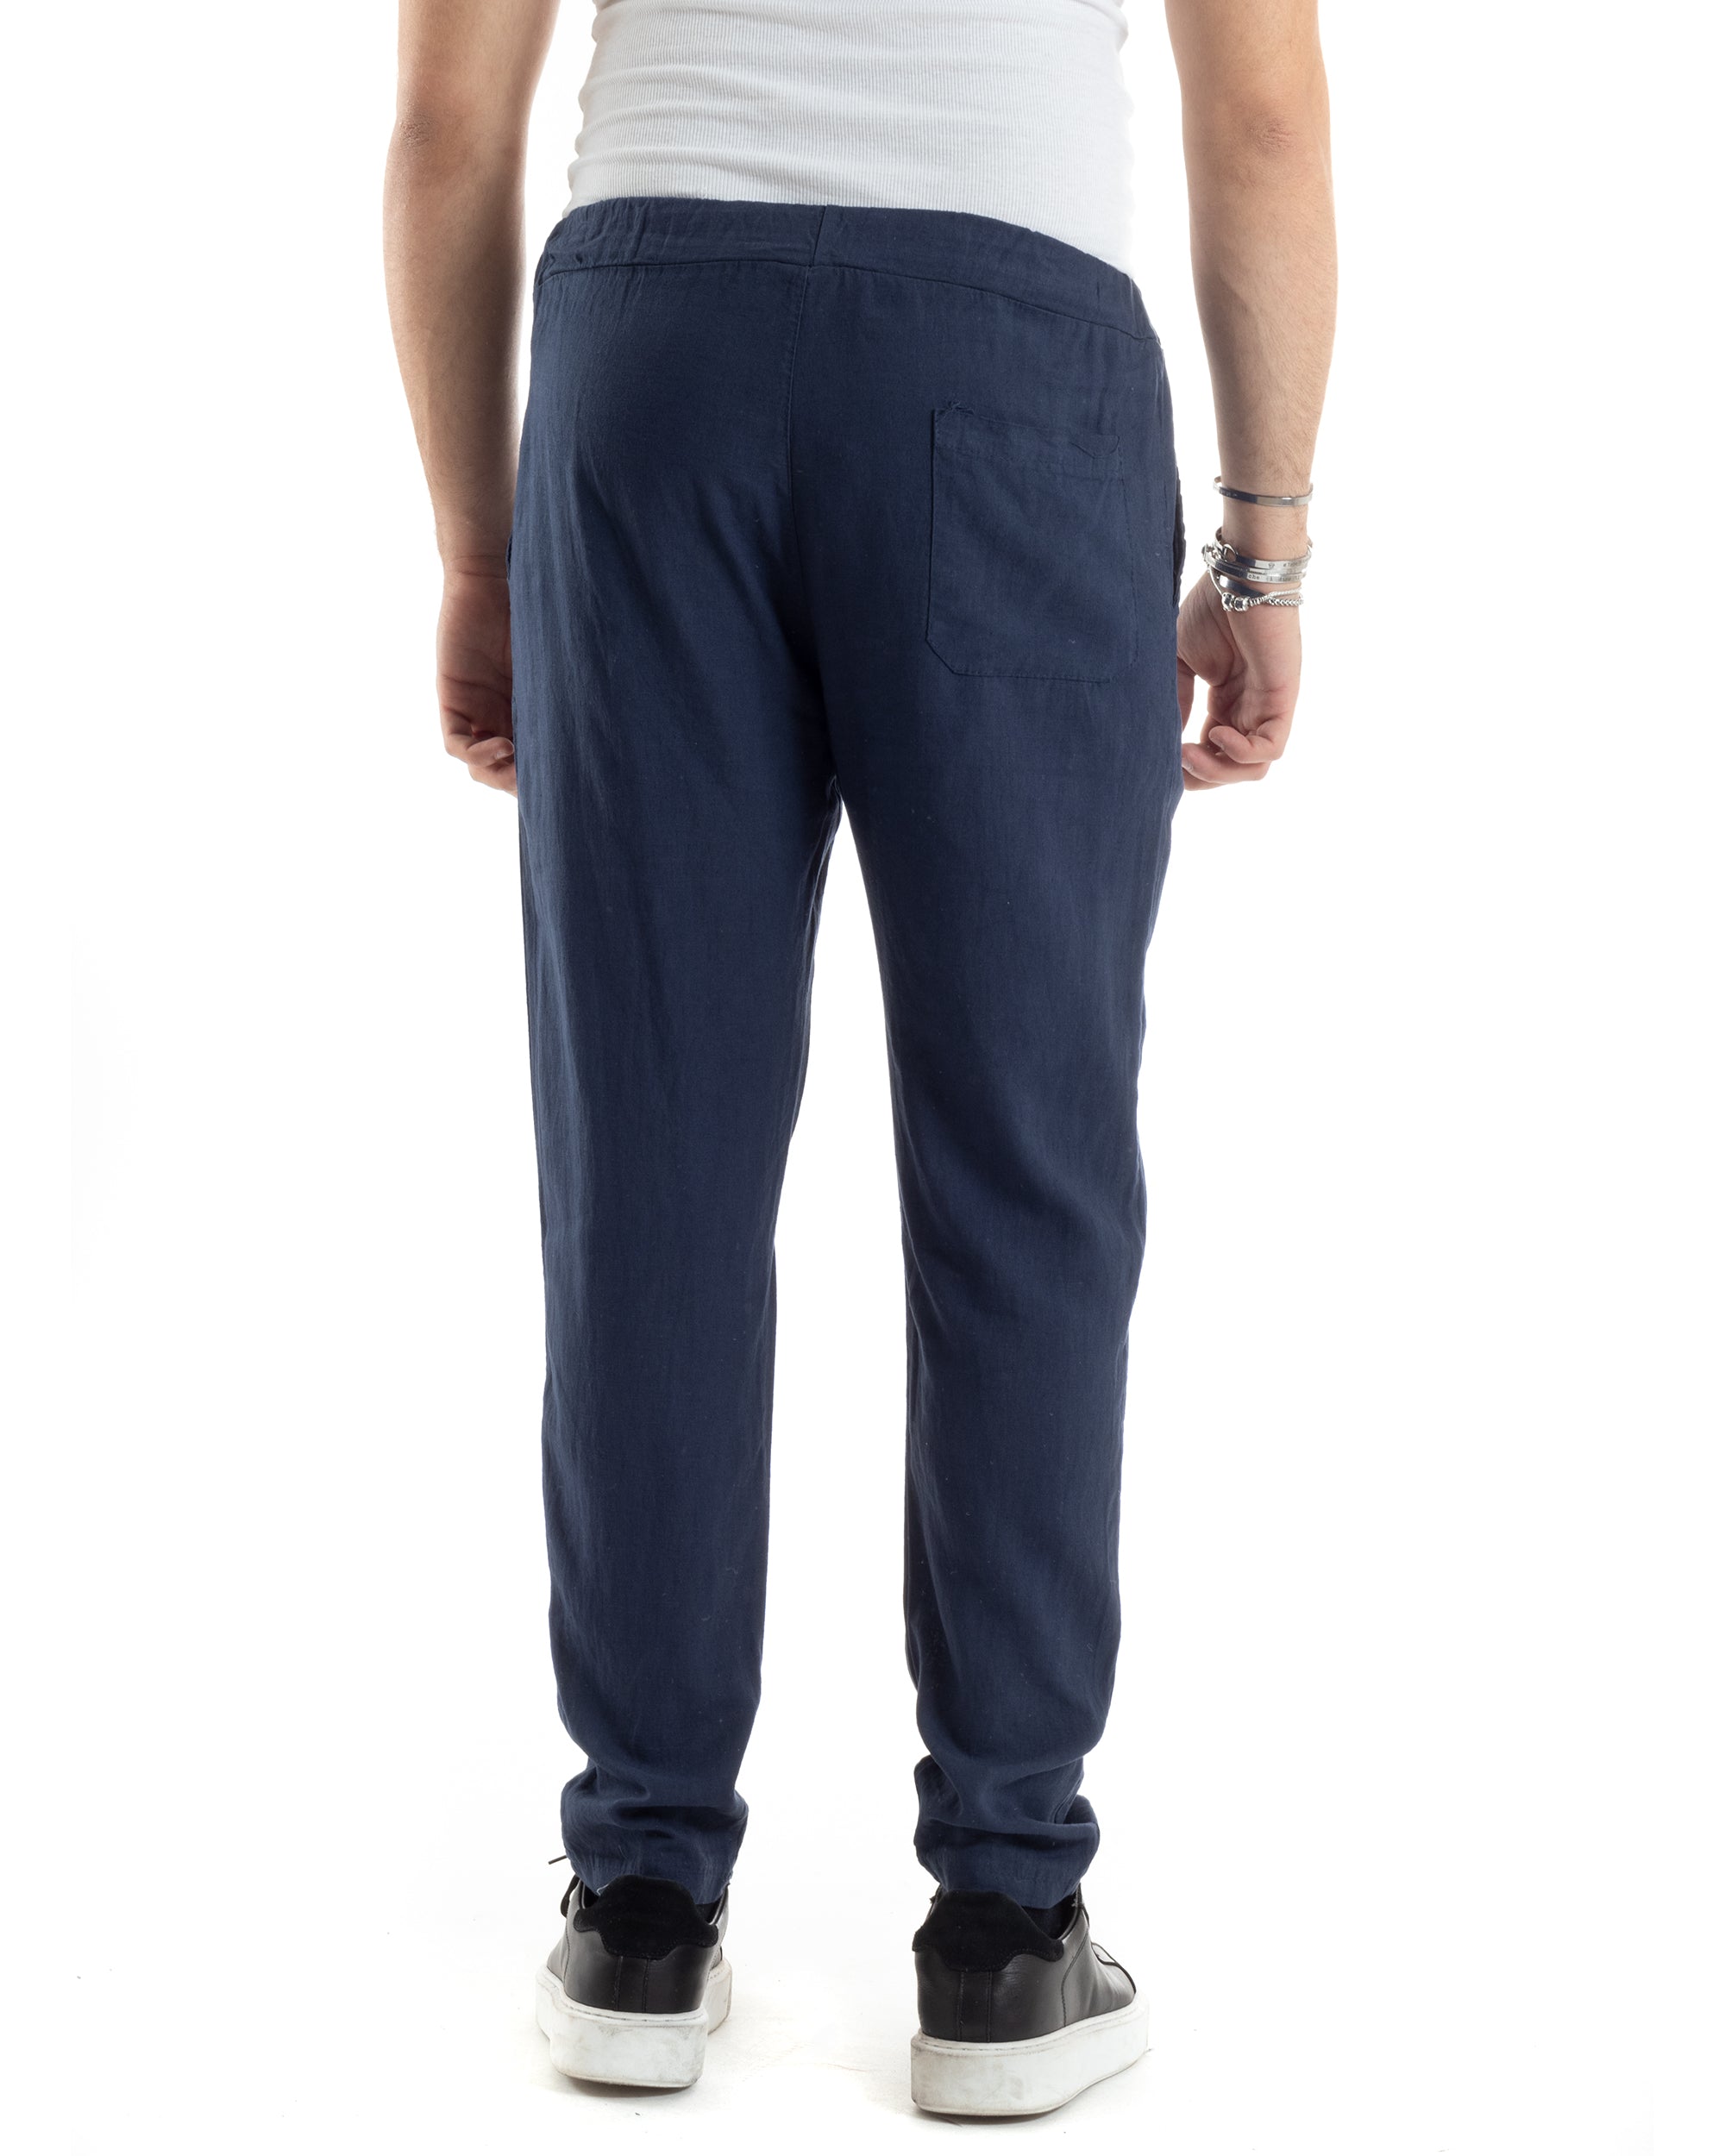 Pantaloni Uomo Lino Pantalaccio Lungo Elastico Regular Fit Tinta Unita Blu Casual GIOSAL-P6099A